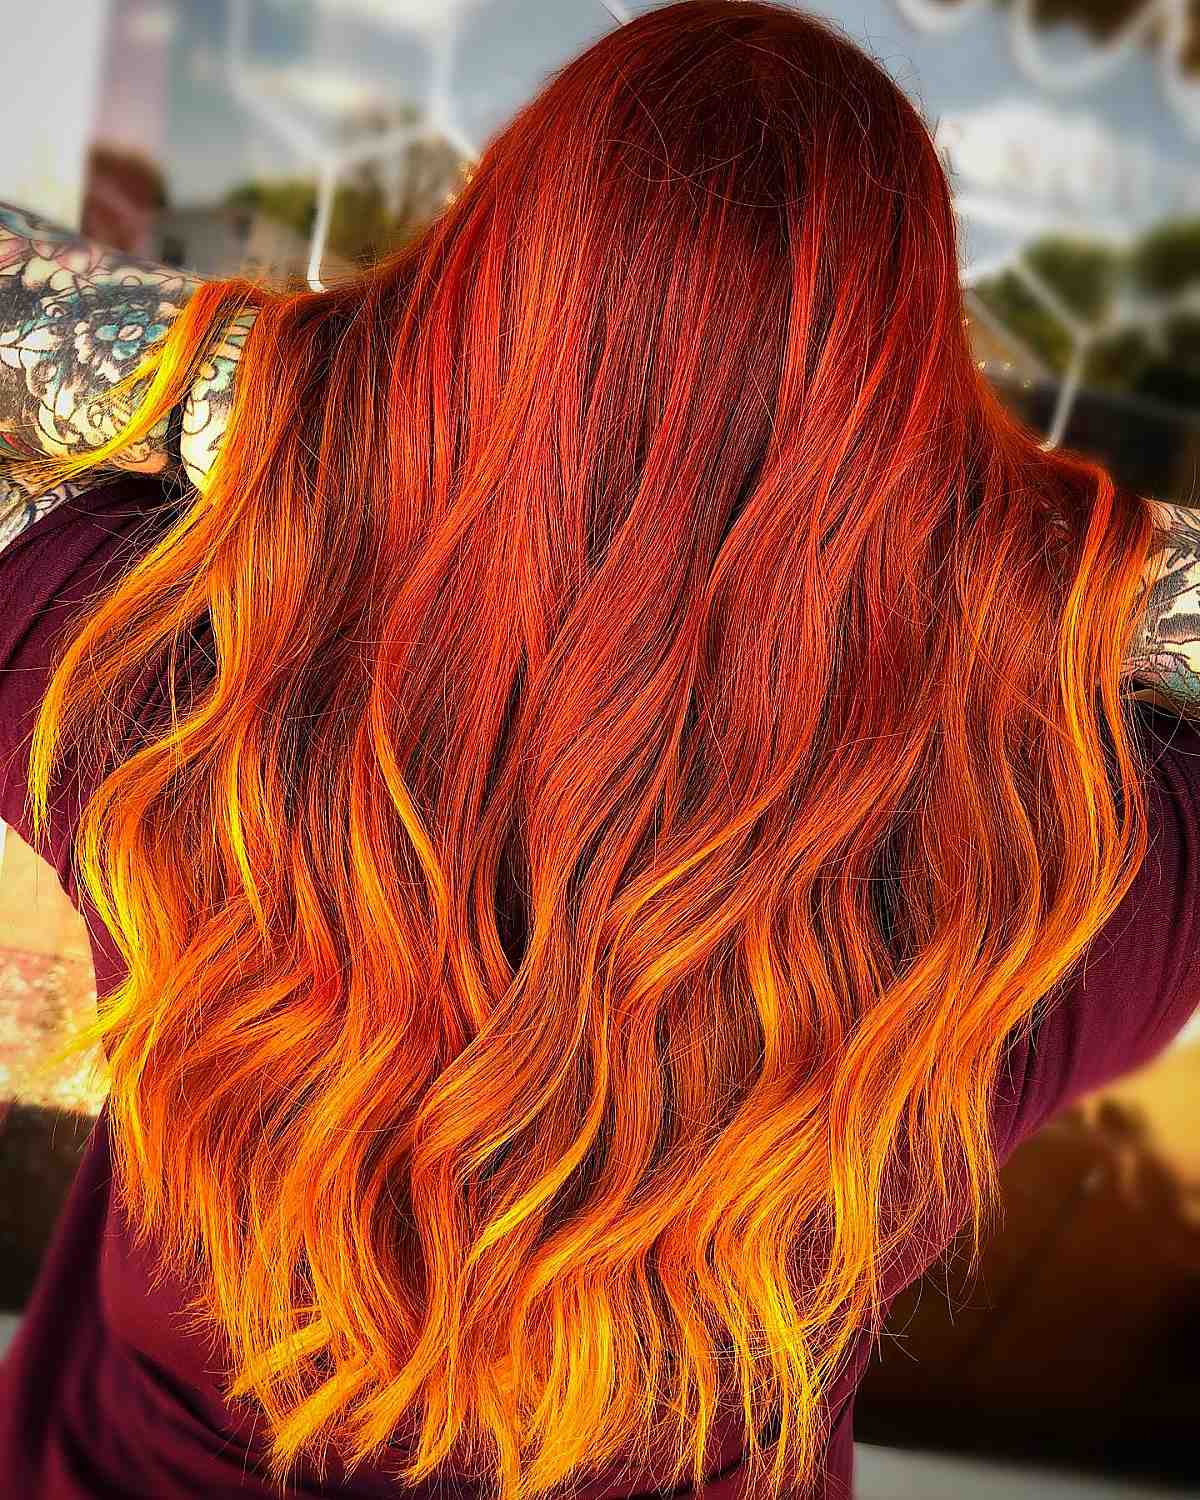 delicious red-orange hair color